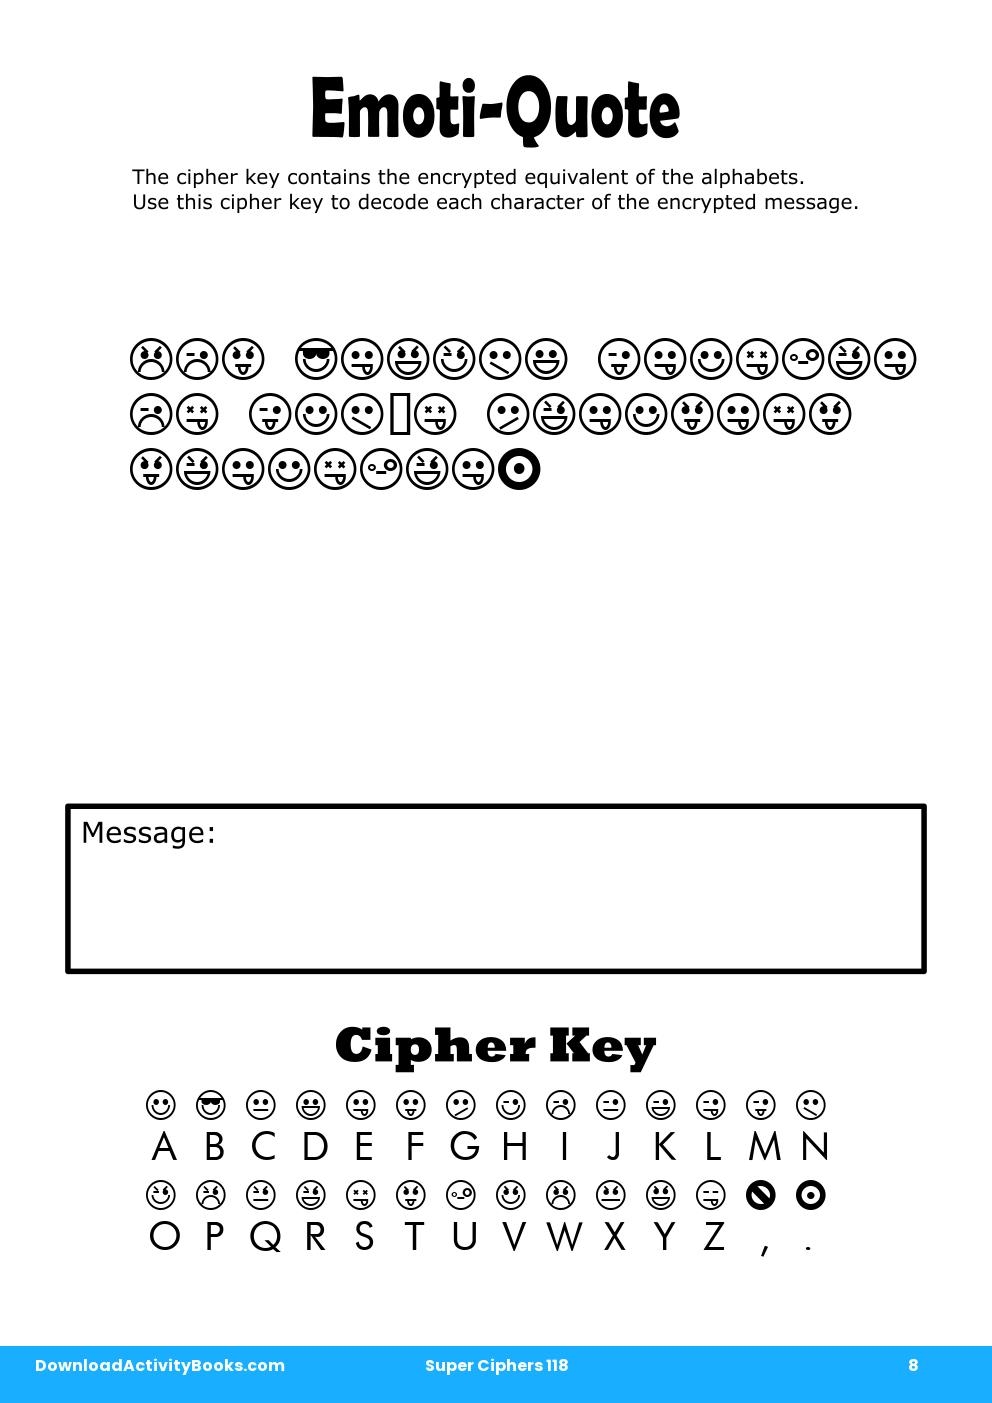 Emoti-Quote in Super Ciphers 118